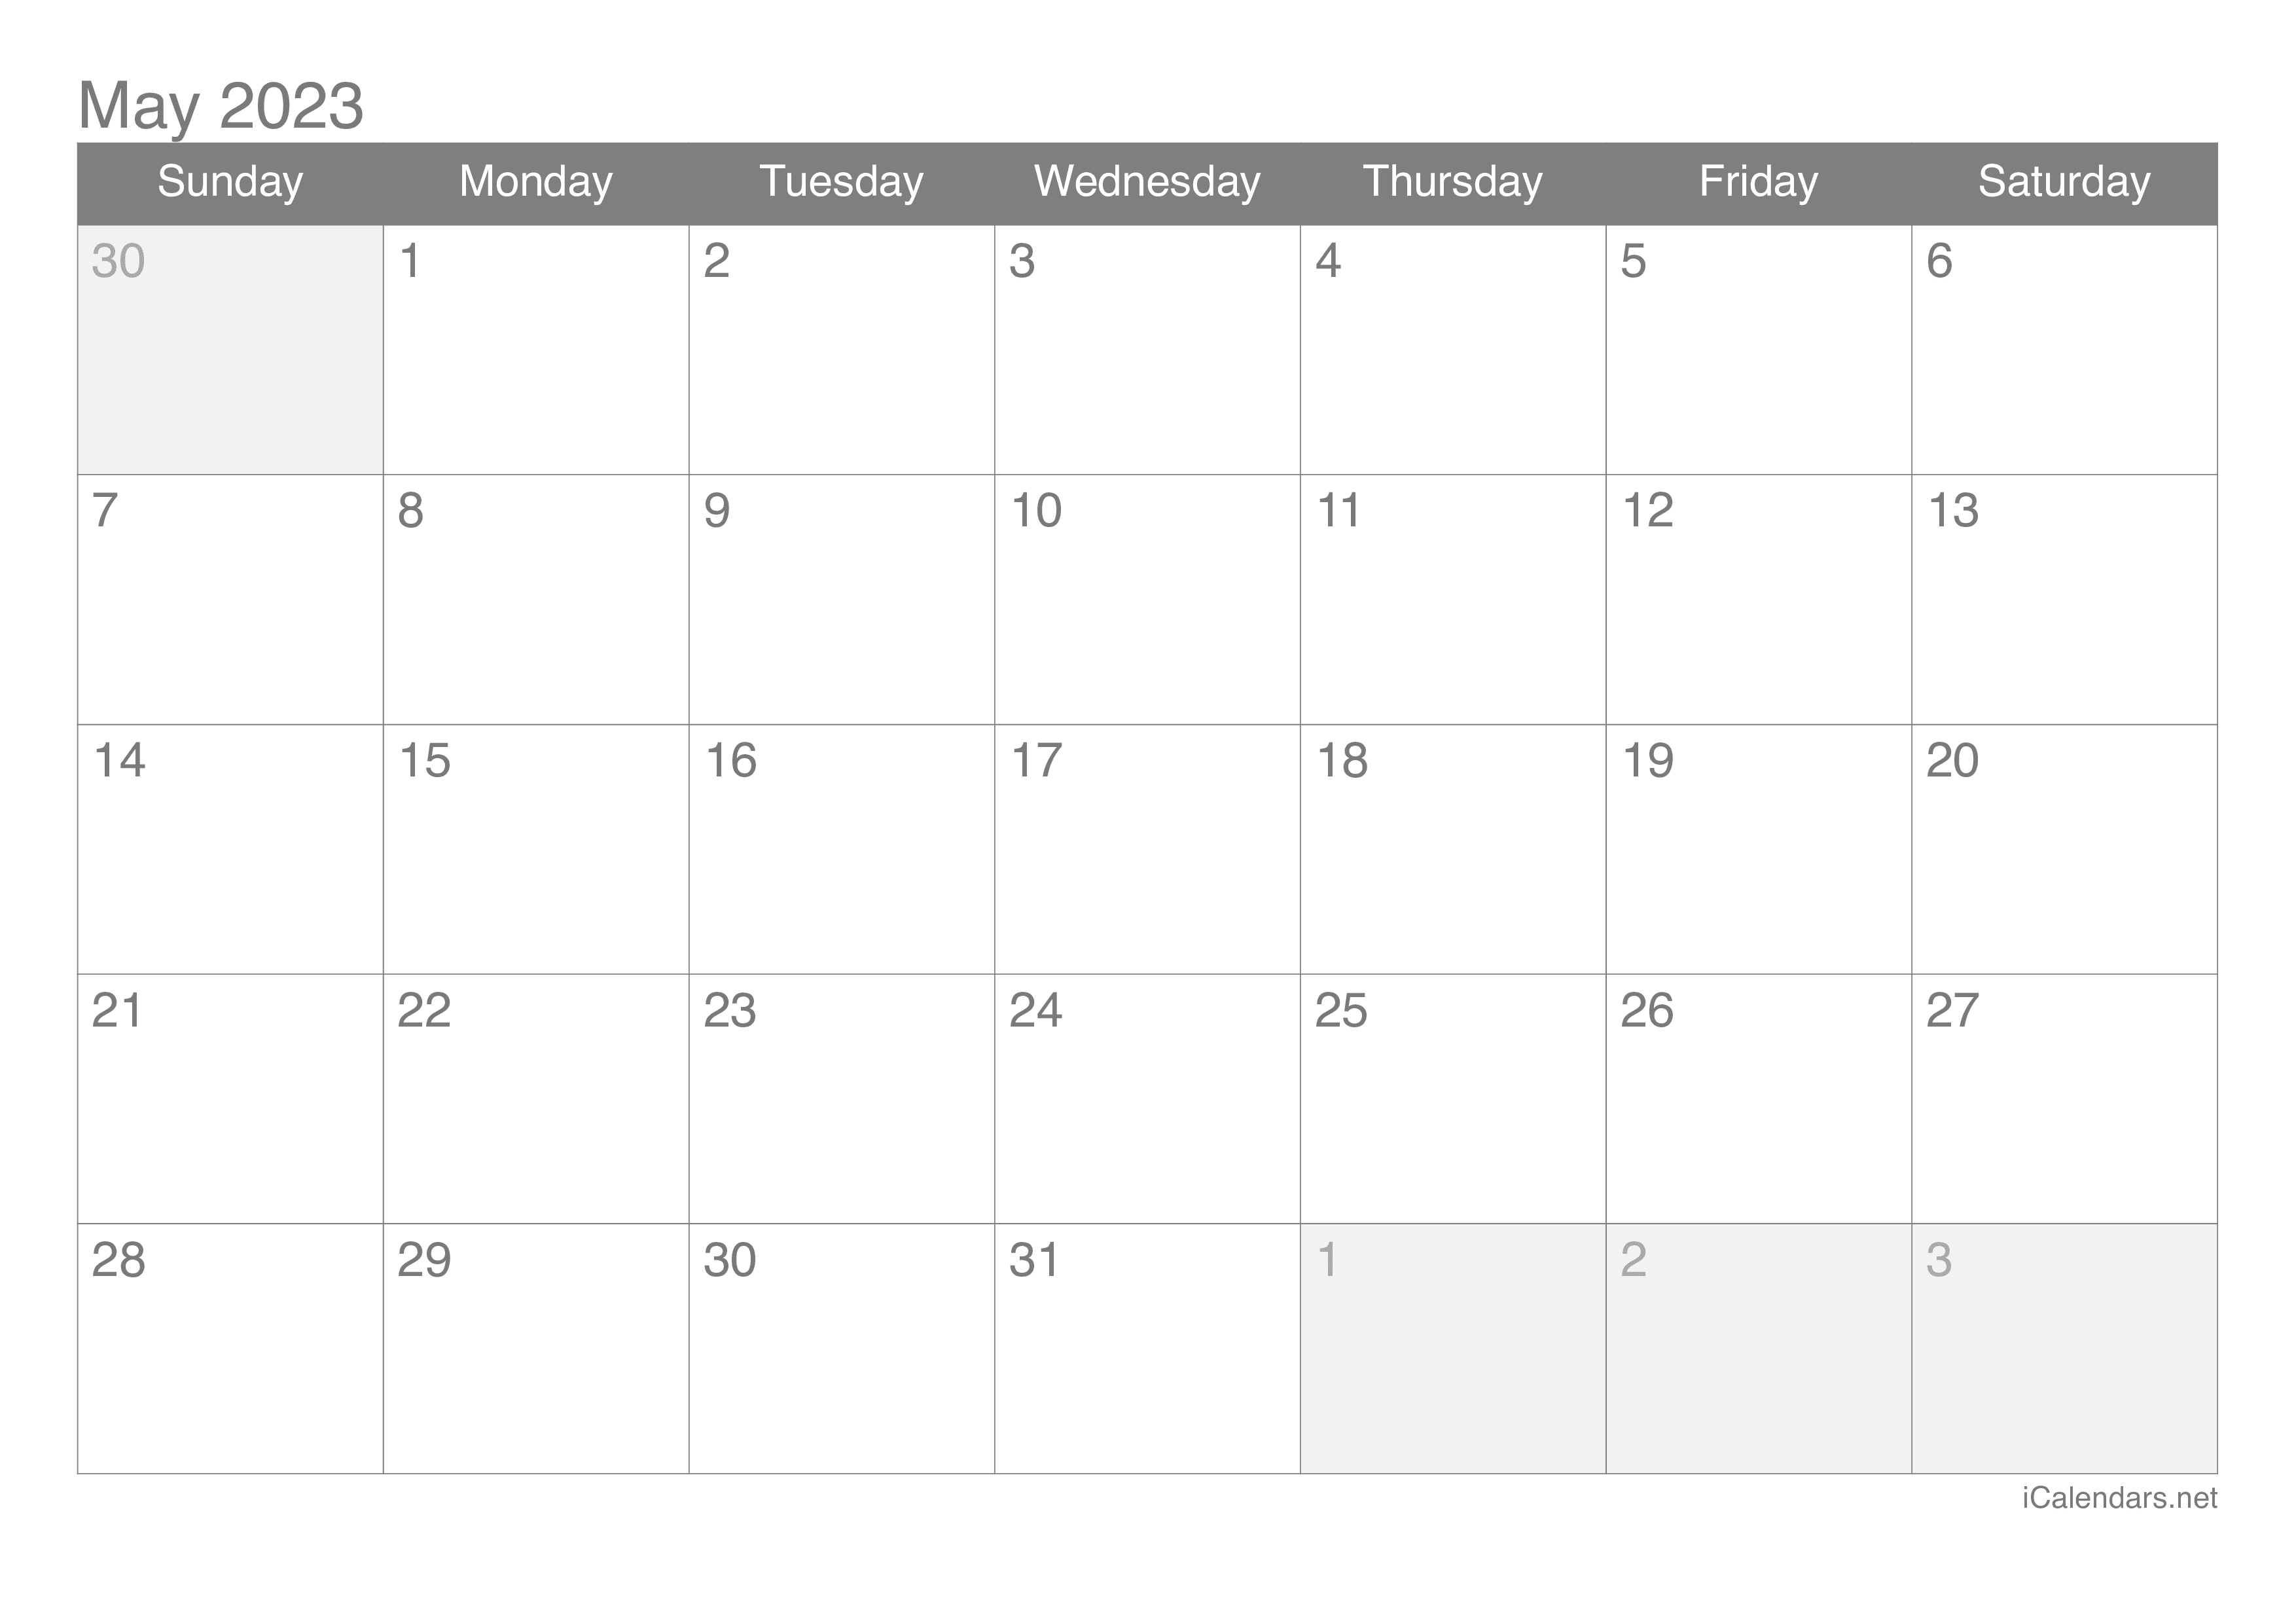 may-2023-calendar-free-printable-calendar-may-2023-calendar-free-printable-calendar-free